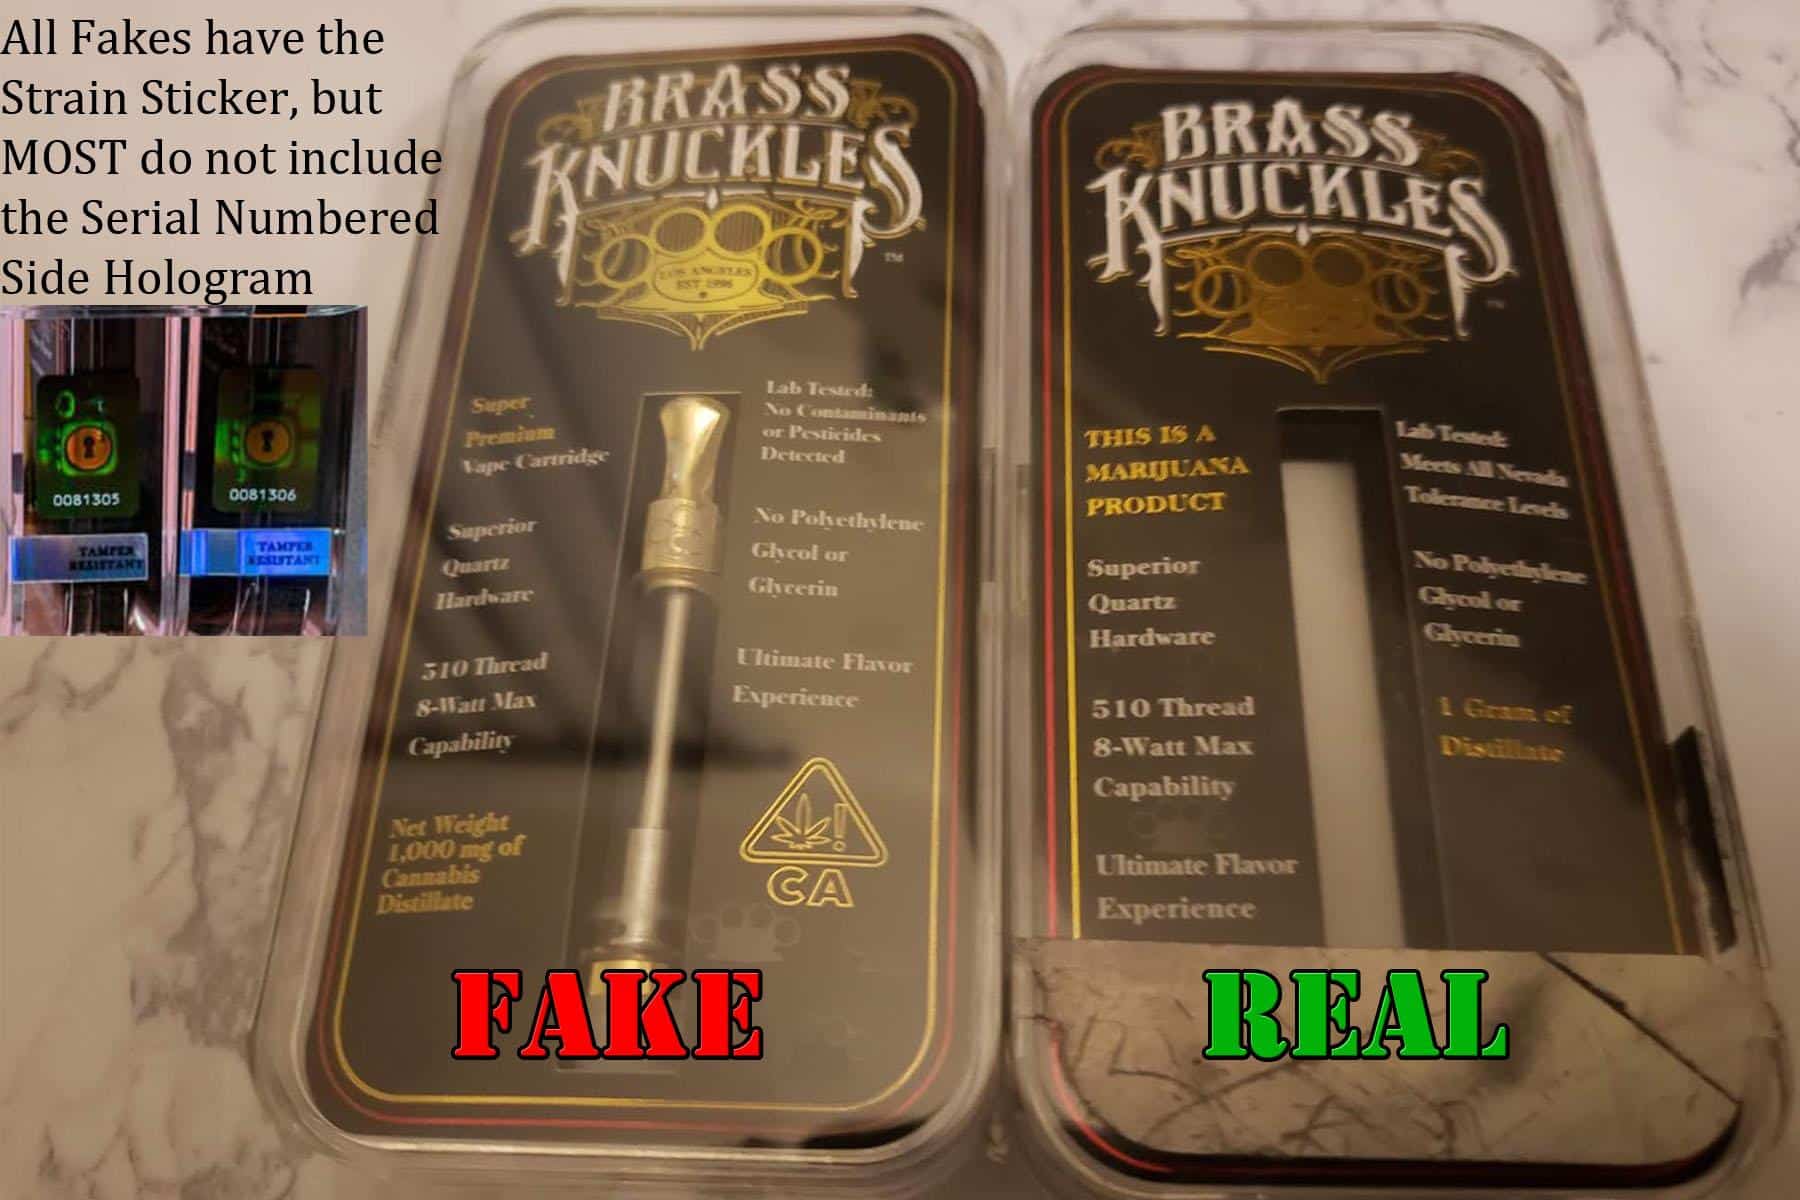 Brass Knuckles GSC Vape Cartridge | Order Now From Pot Valet